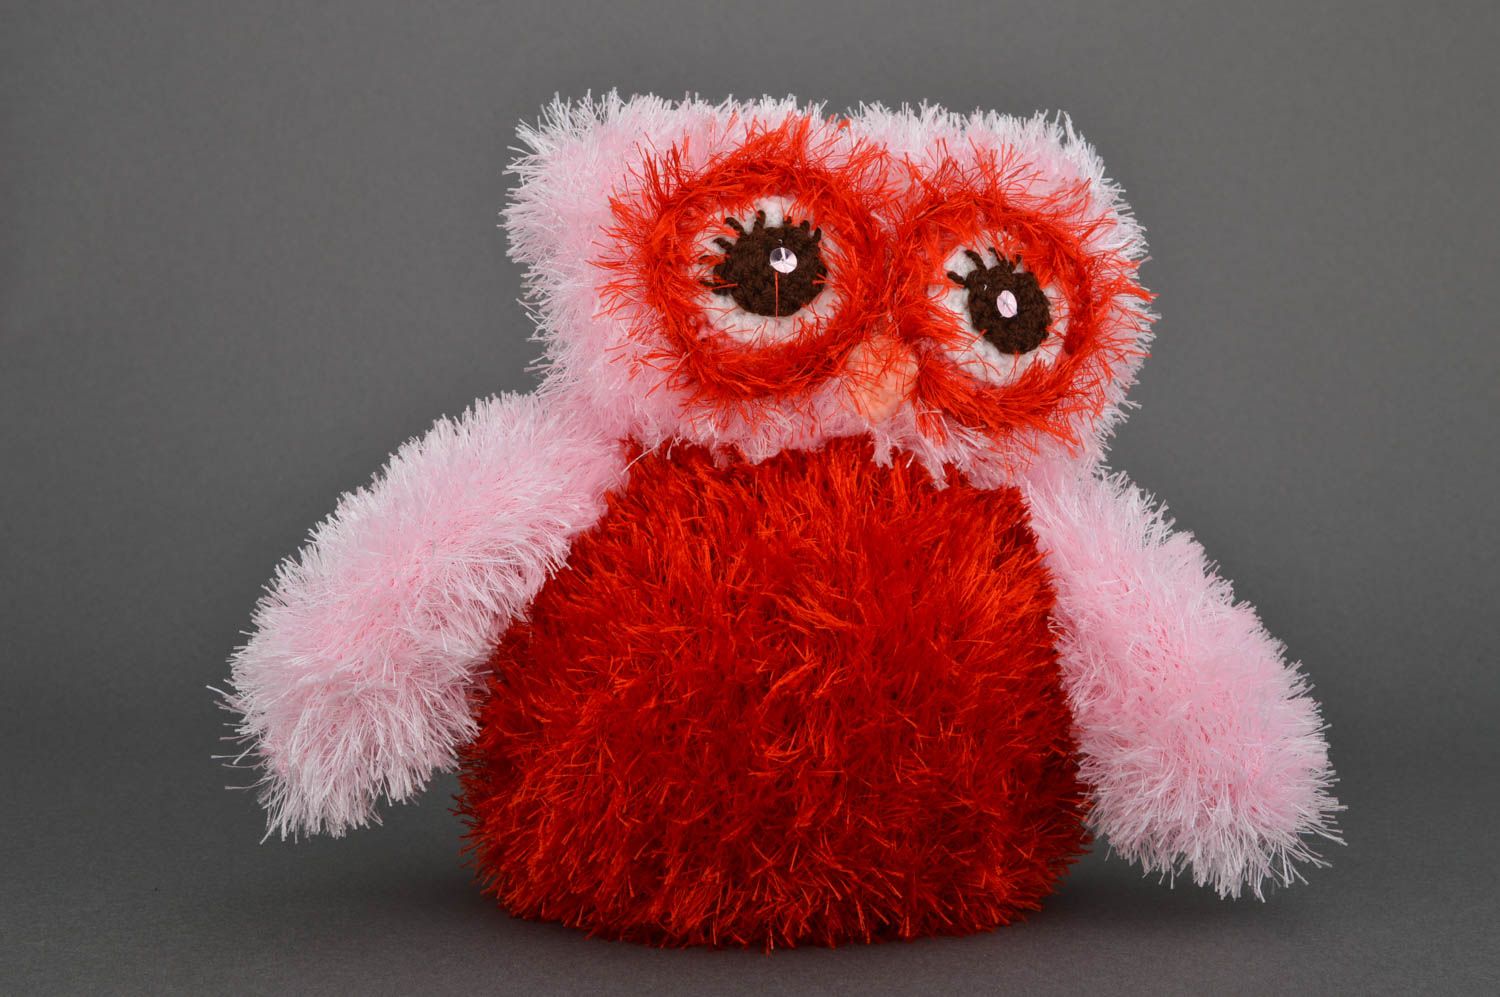 Handmade soft toy decorative stuffed toy gift for baby nursery decor ideas photo 3